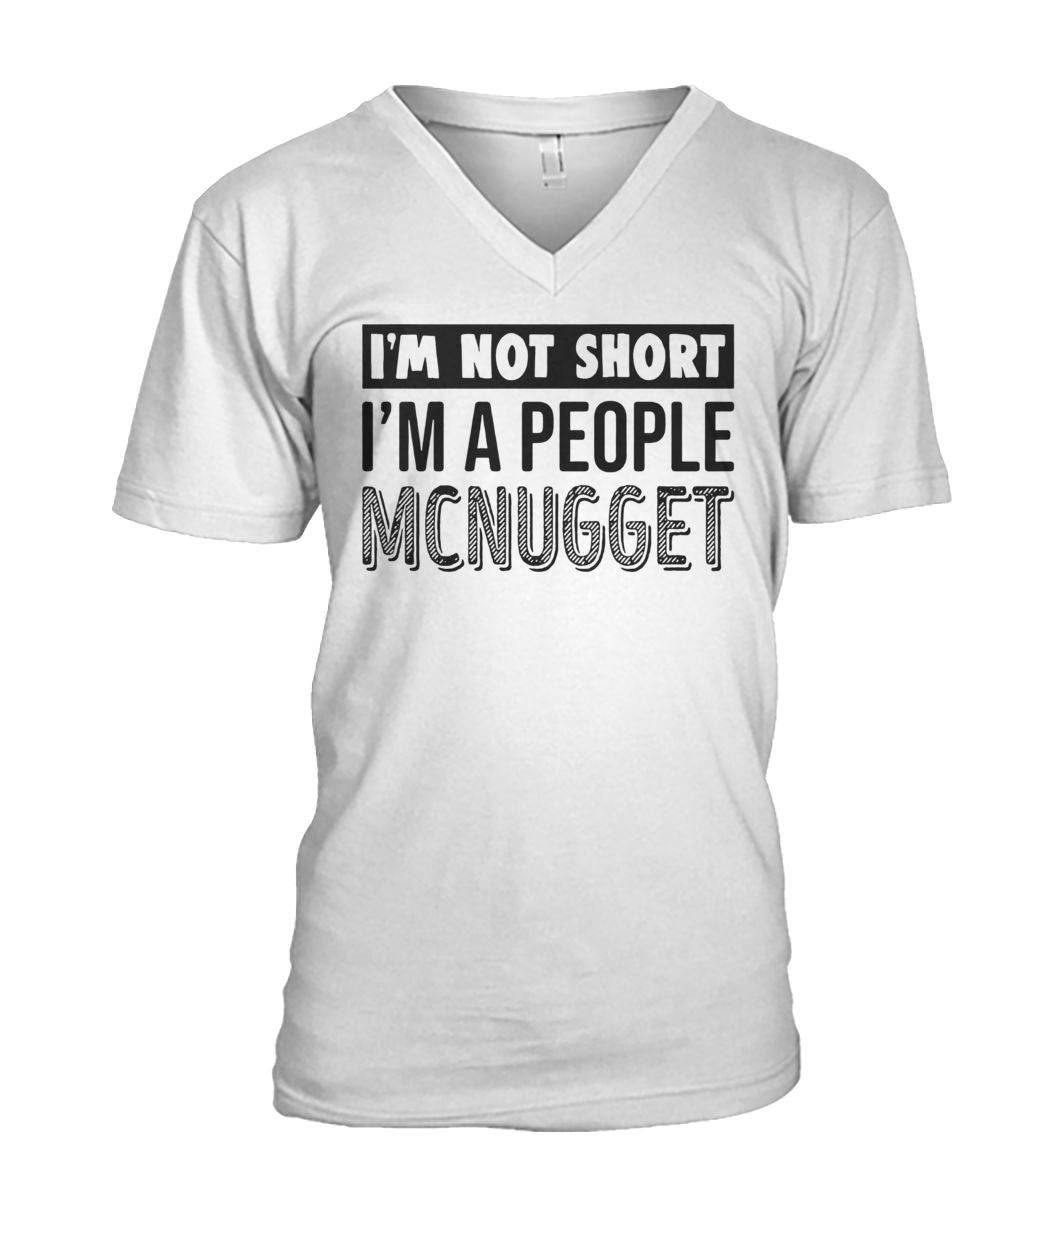 I'm not short I'm a people mcnugget mens v-neck